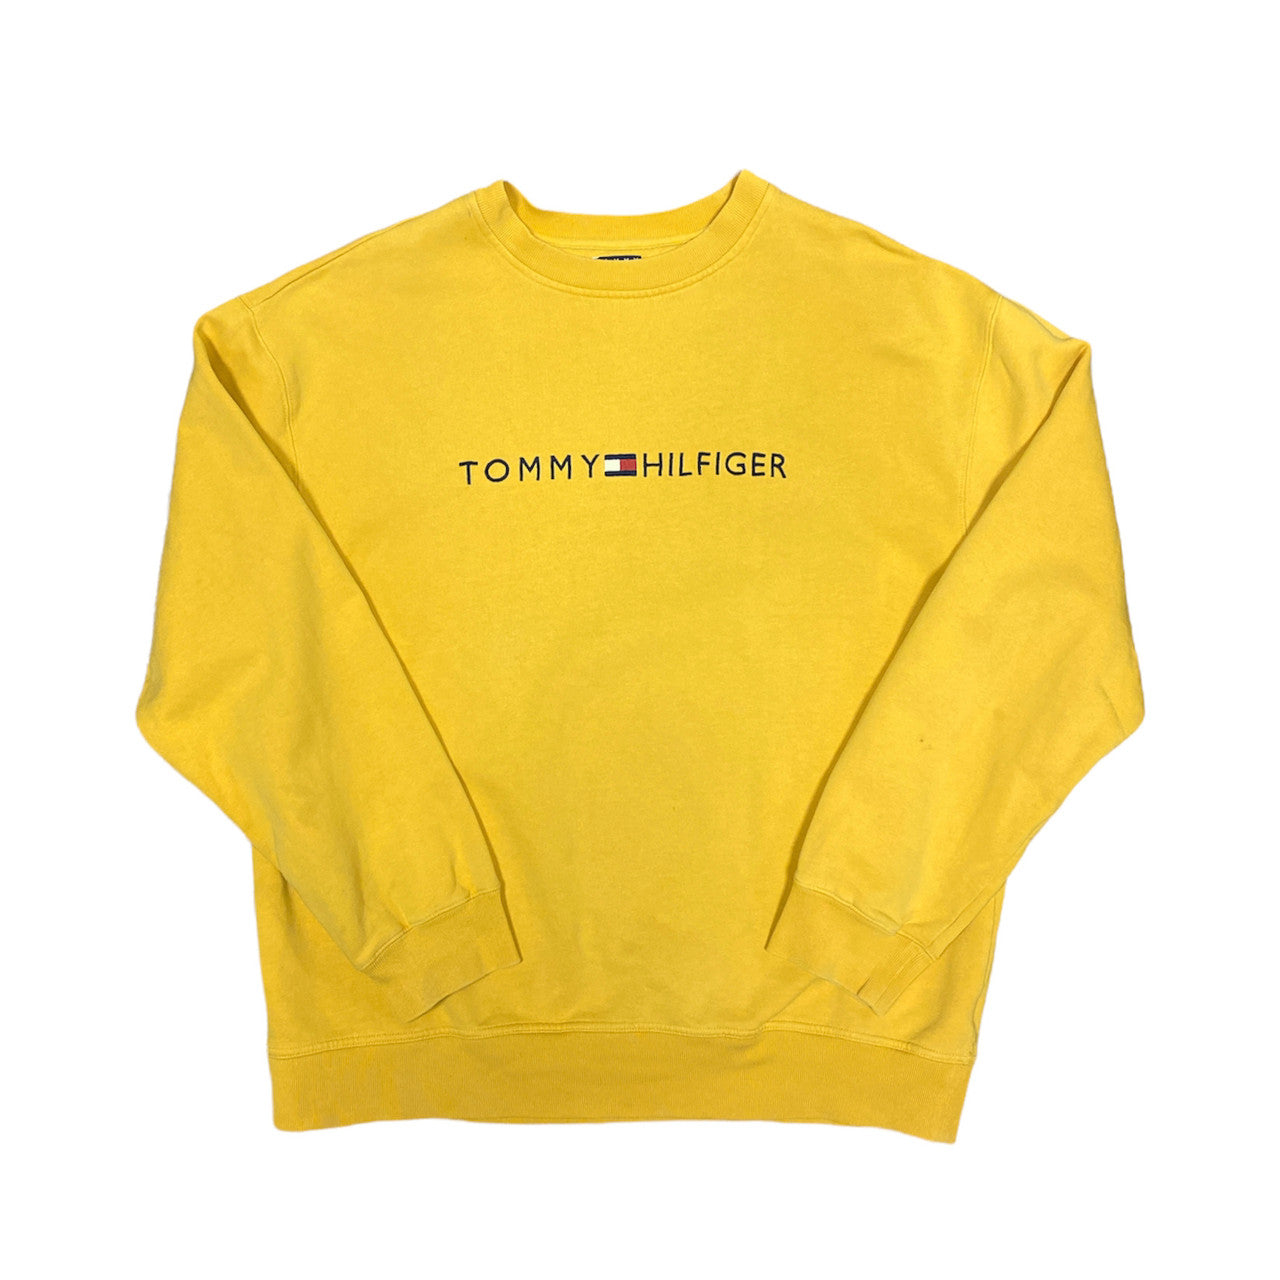 Tommy Hilfiger Sweatshirt Yellow